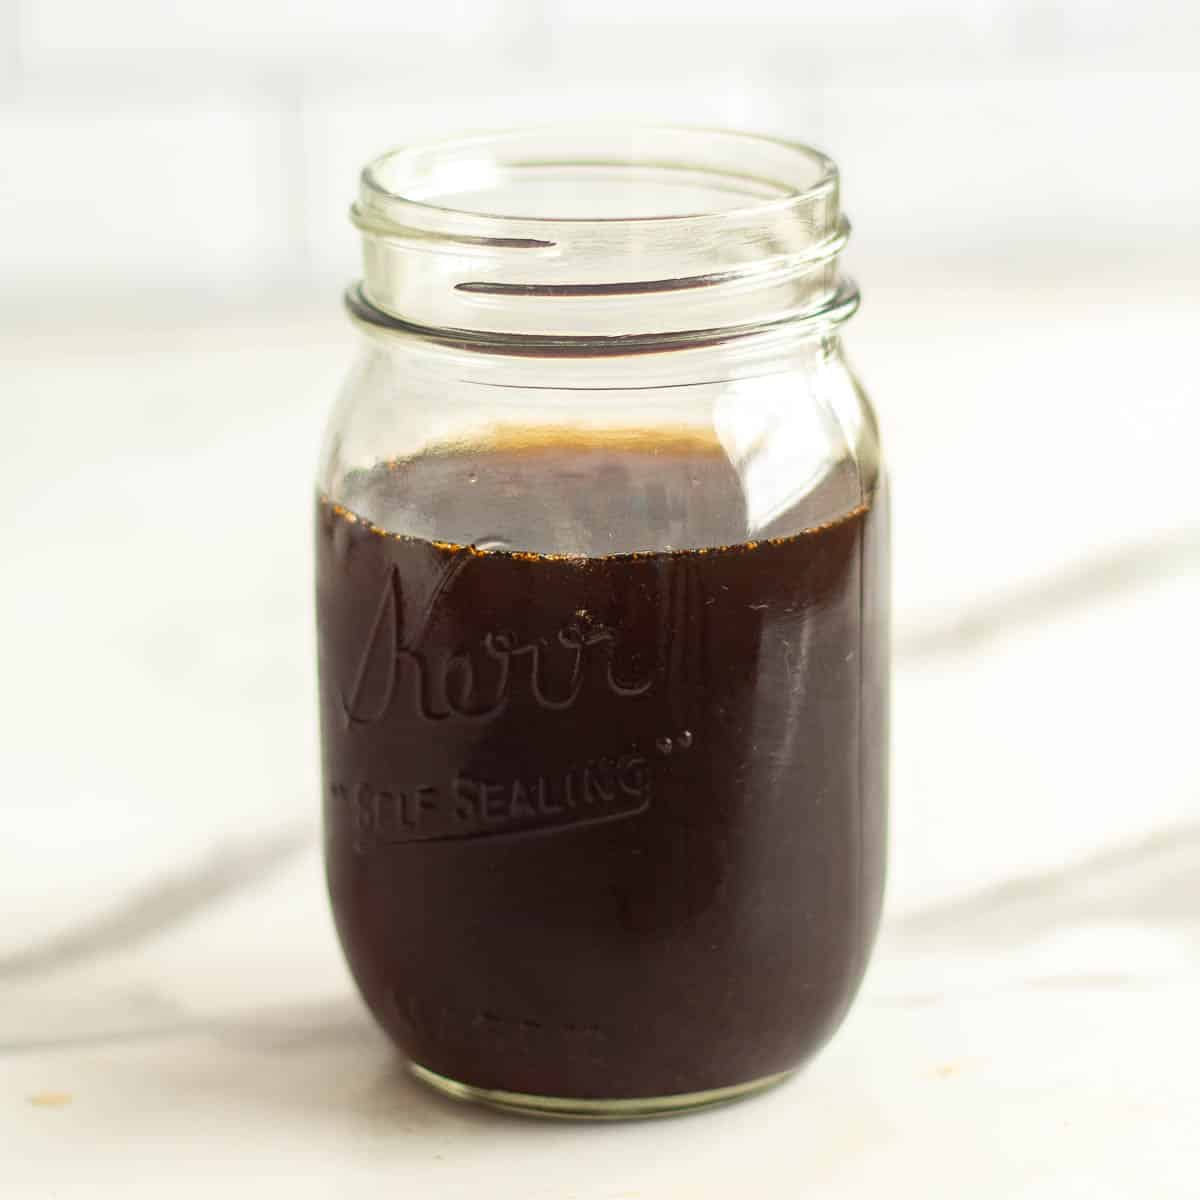 starbucks brown sugar syrup in a jar